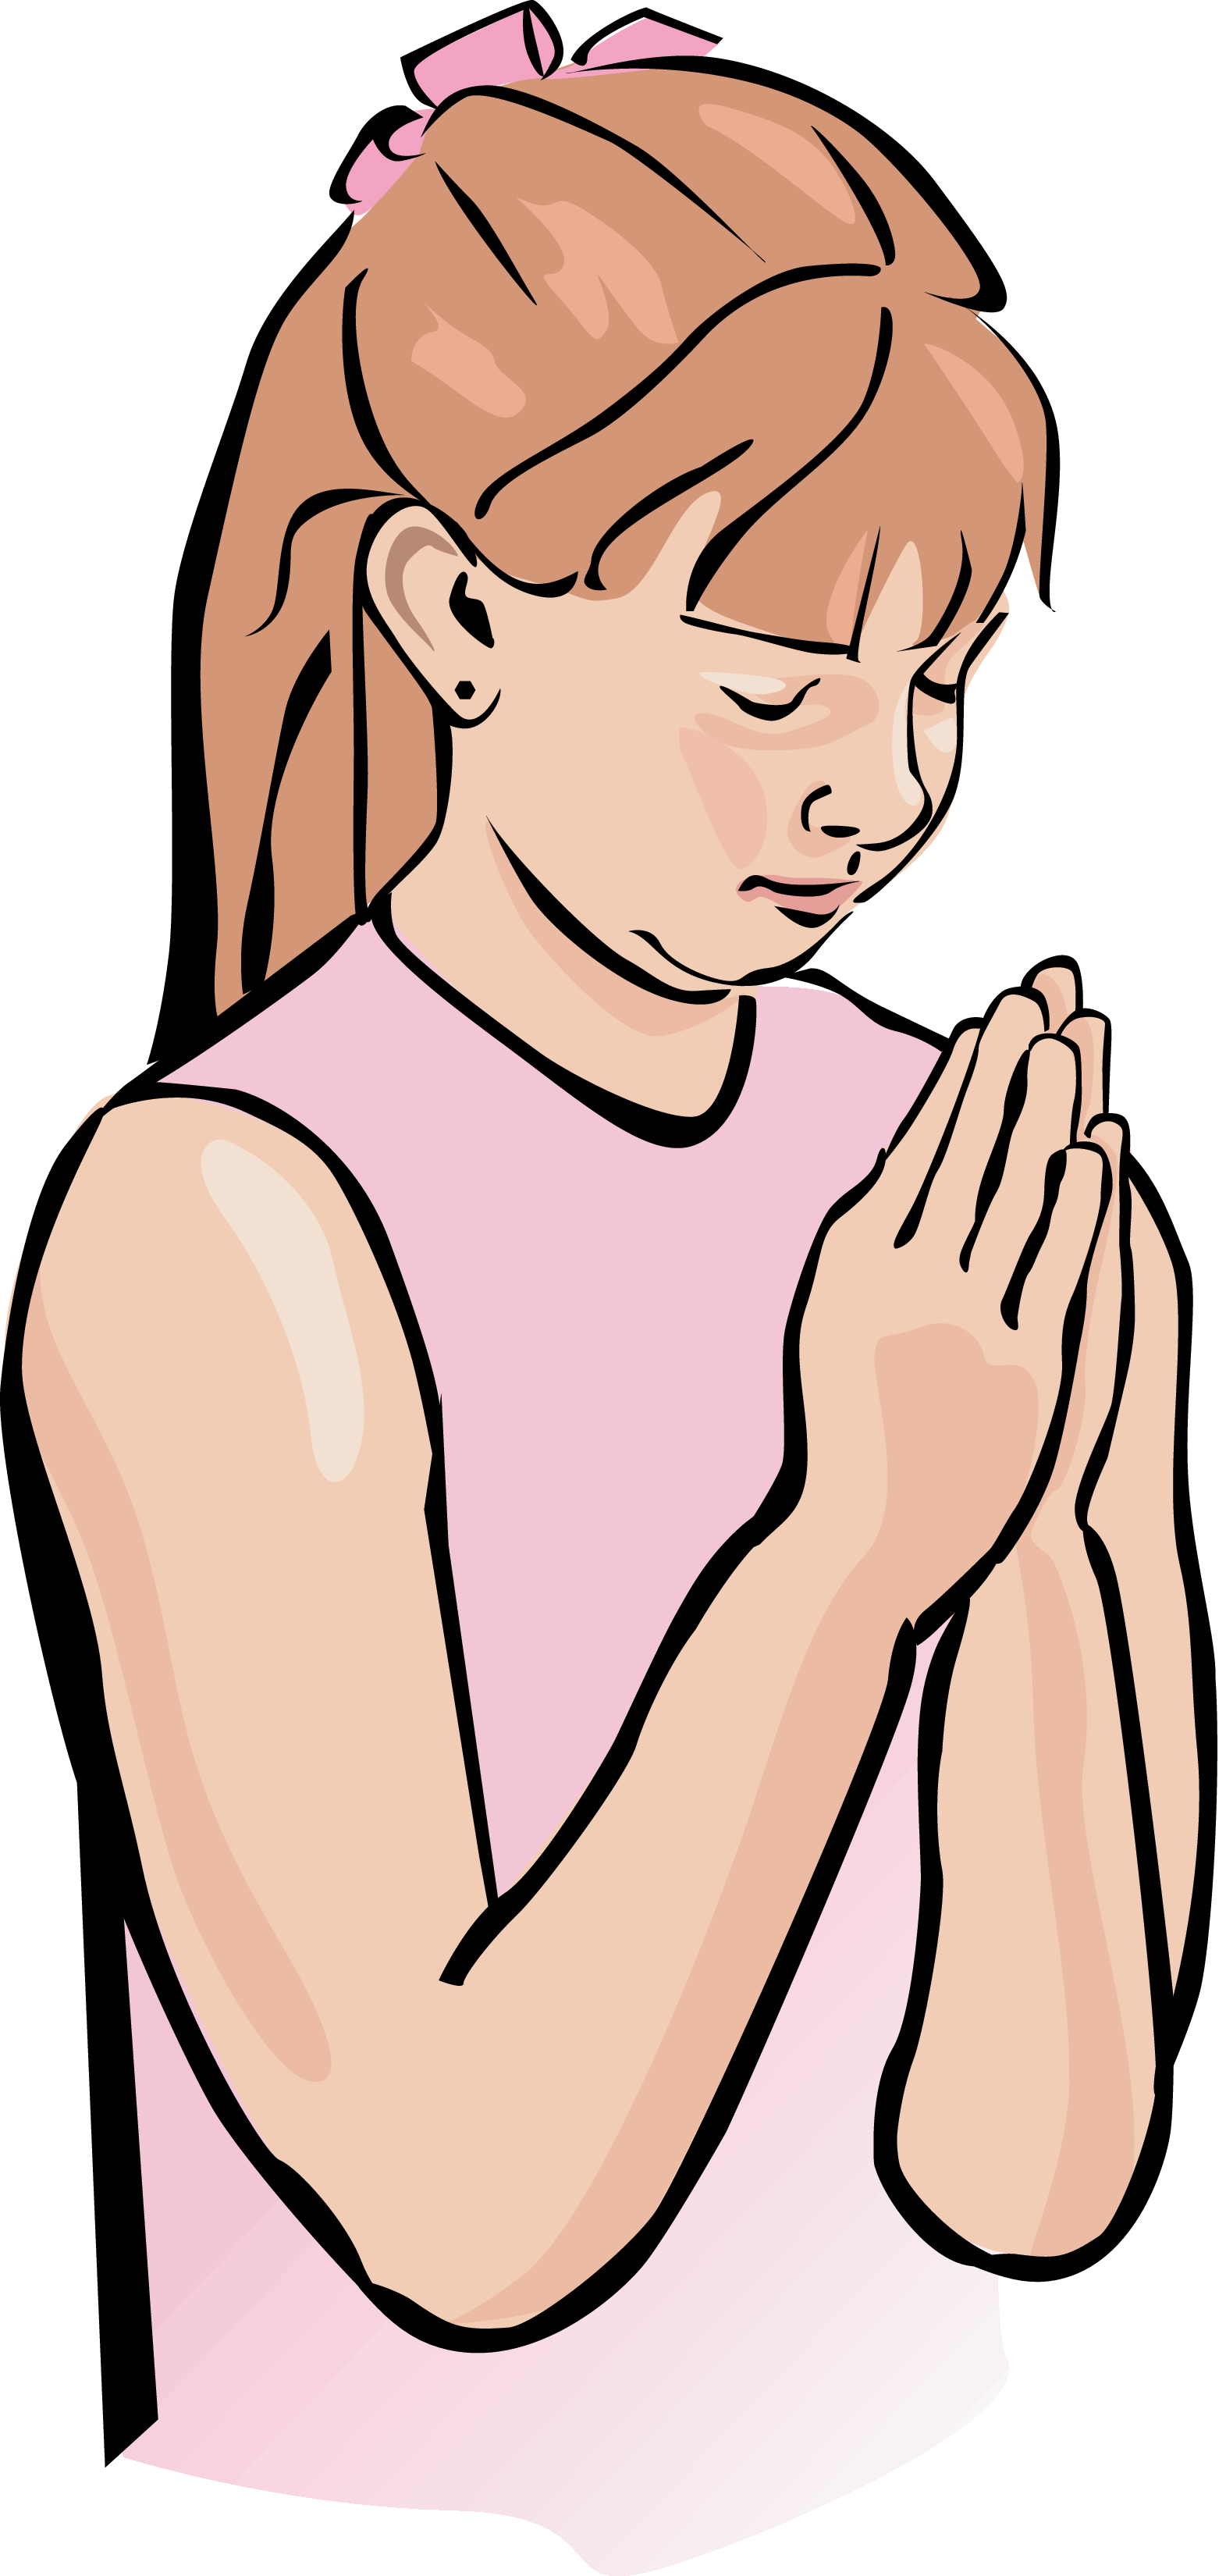 clipart of little girl praying - photo #45